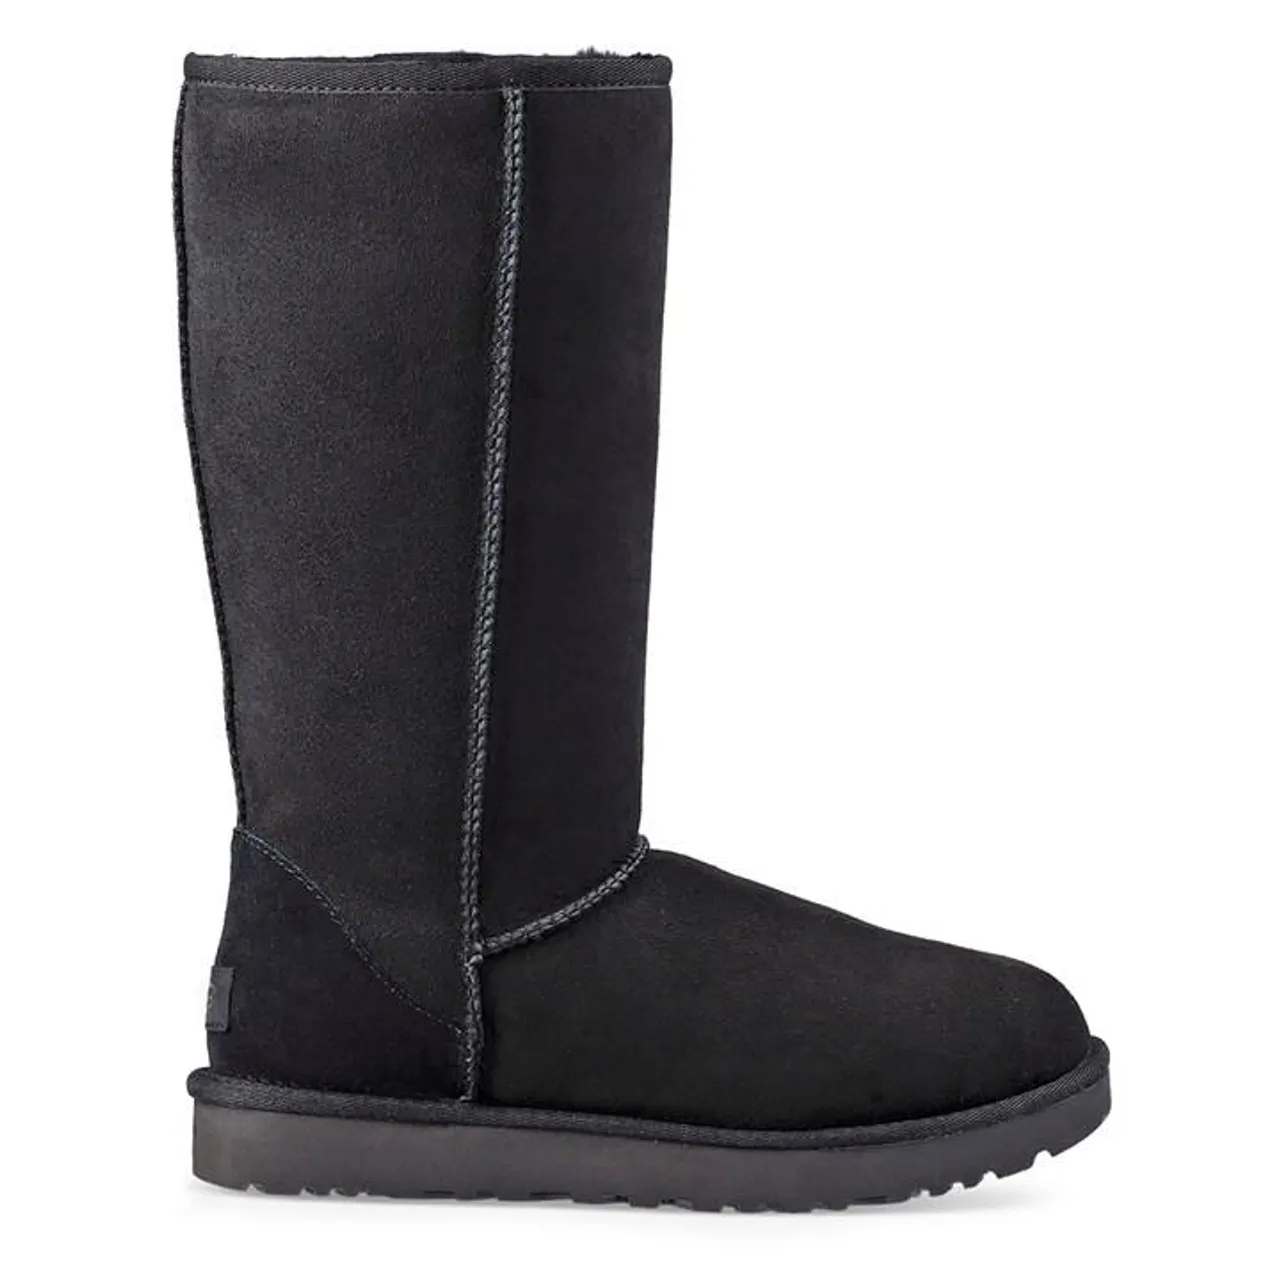 Ugg Tall 2 Boots - Black